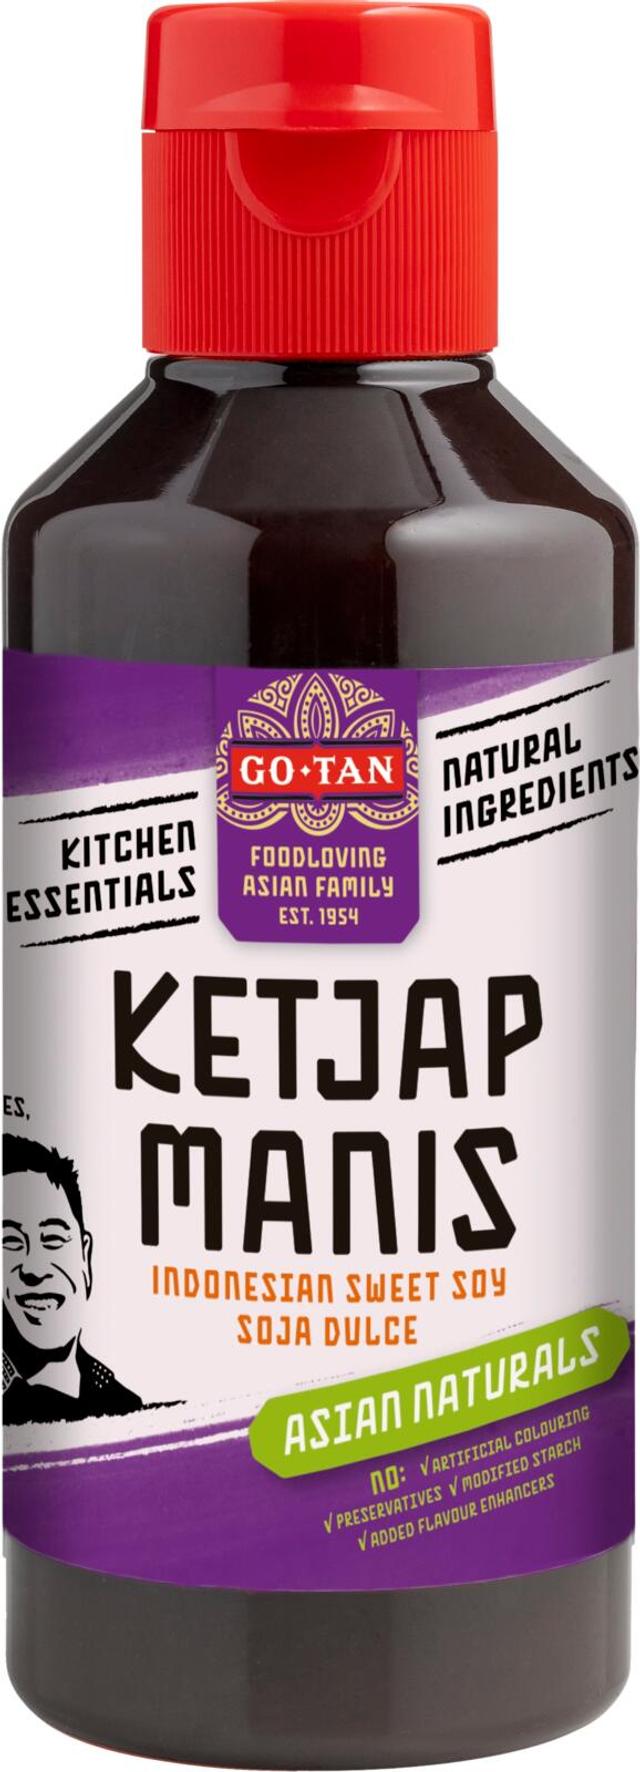 Go-Tan Ketjap Manis makea soijakastike 270ml